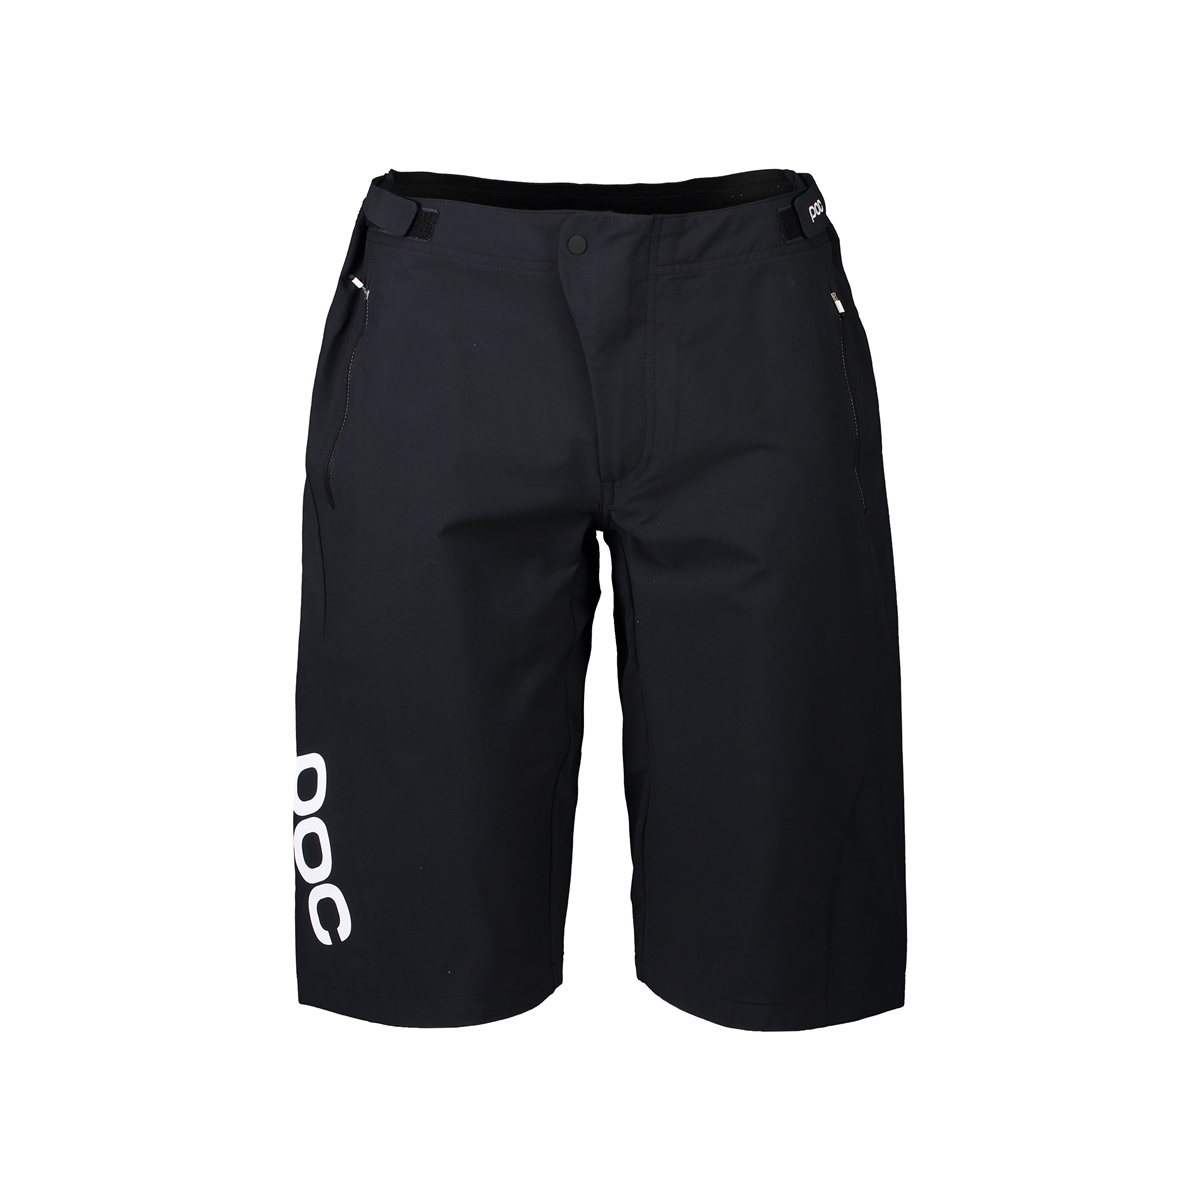 Essential Enduro Shorts black size M